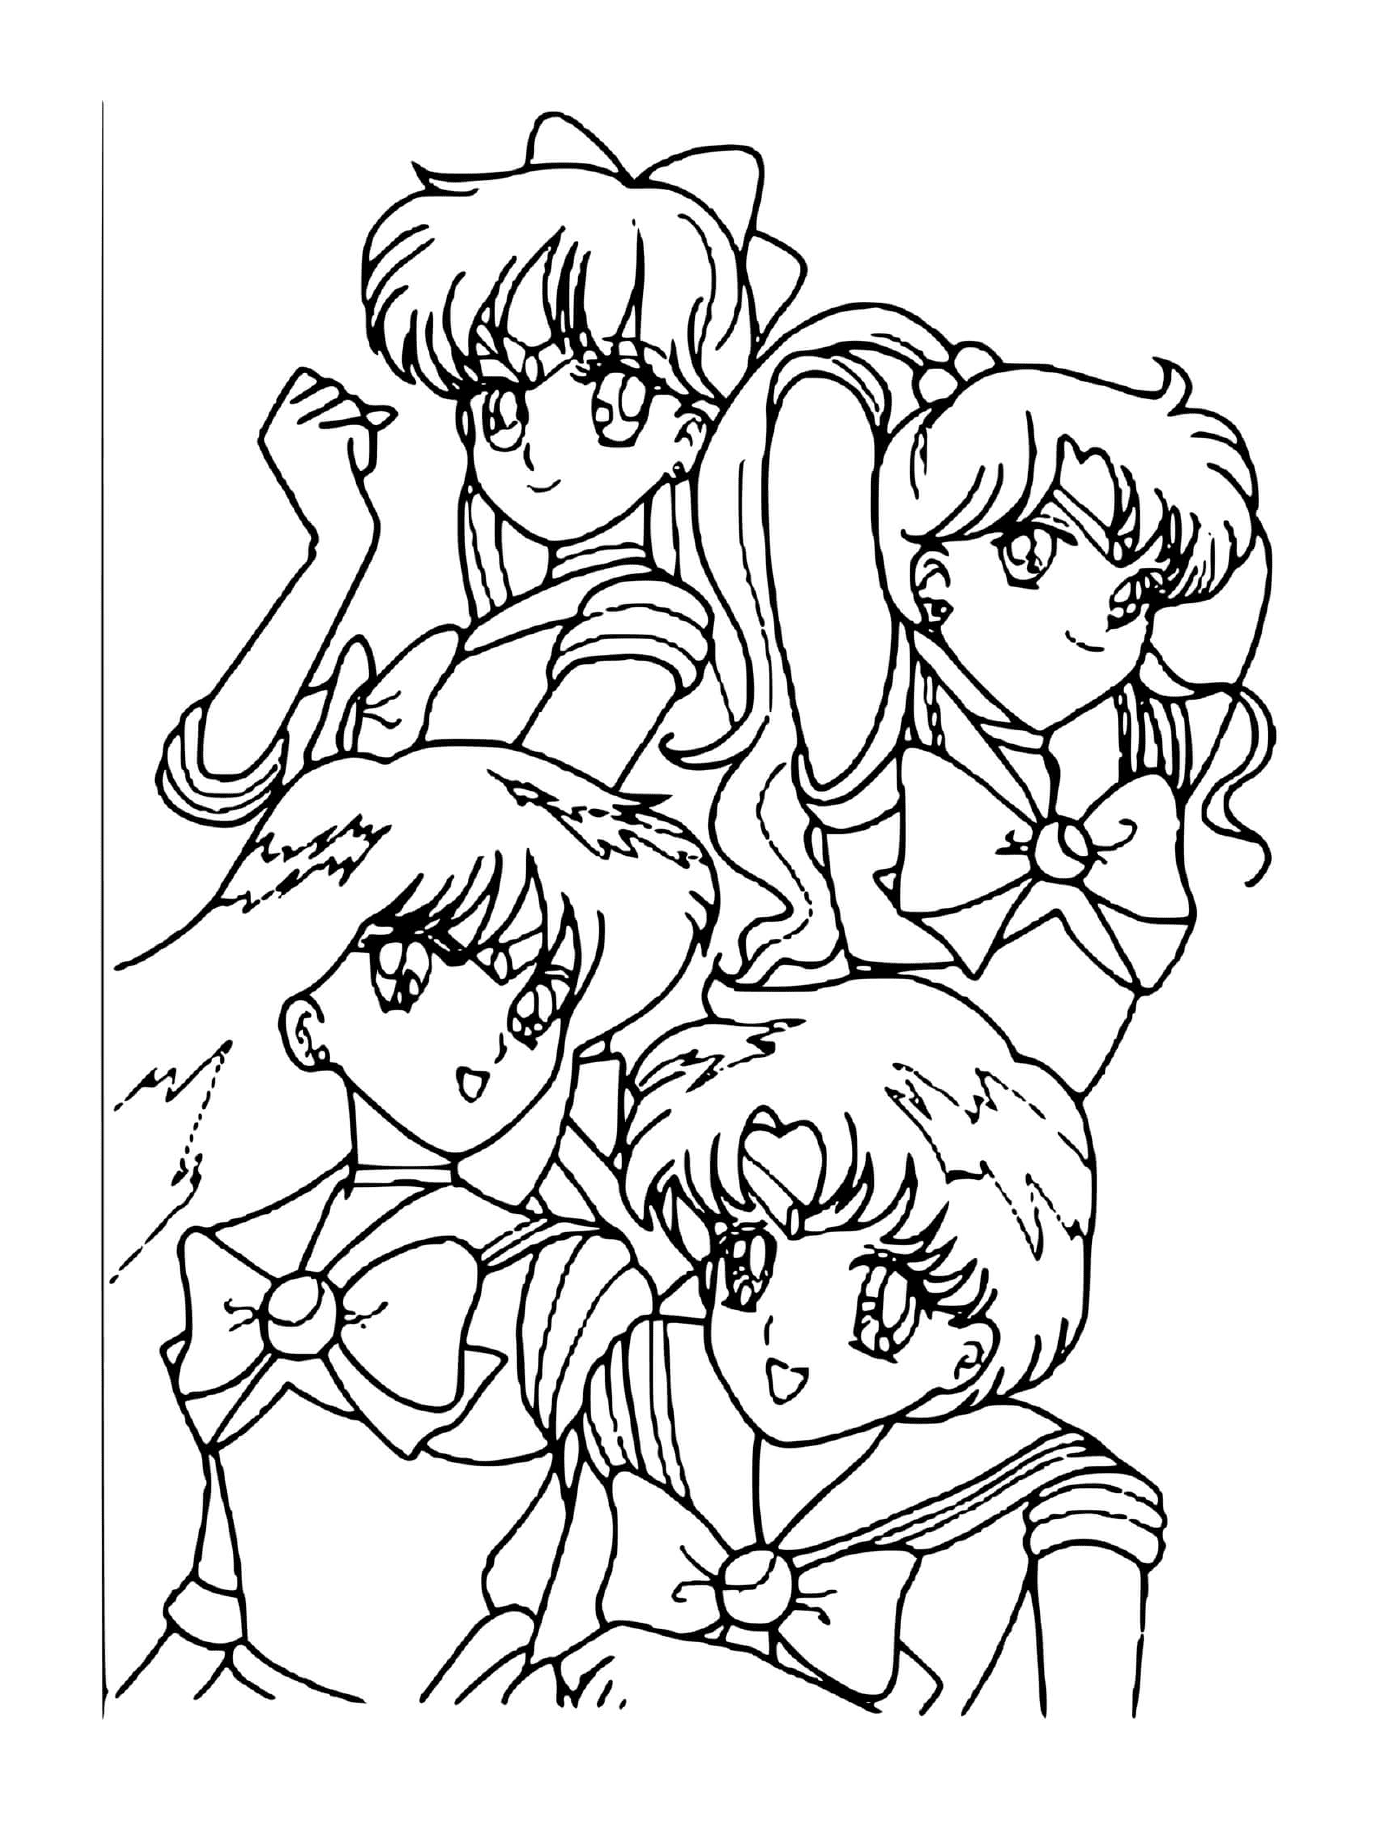  Gruppo di persone insieme a Sailor Moon 